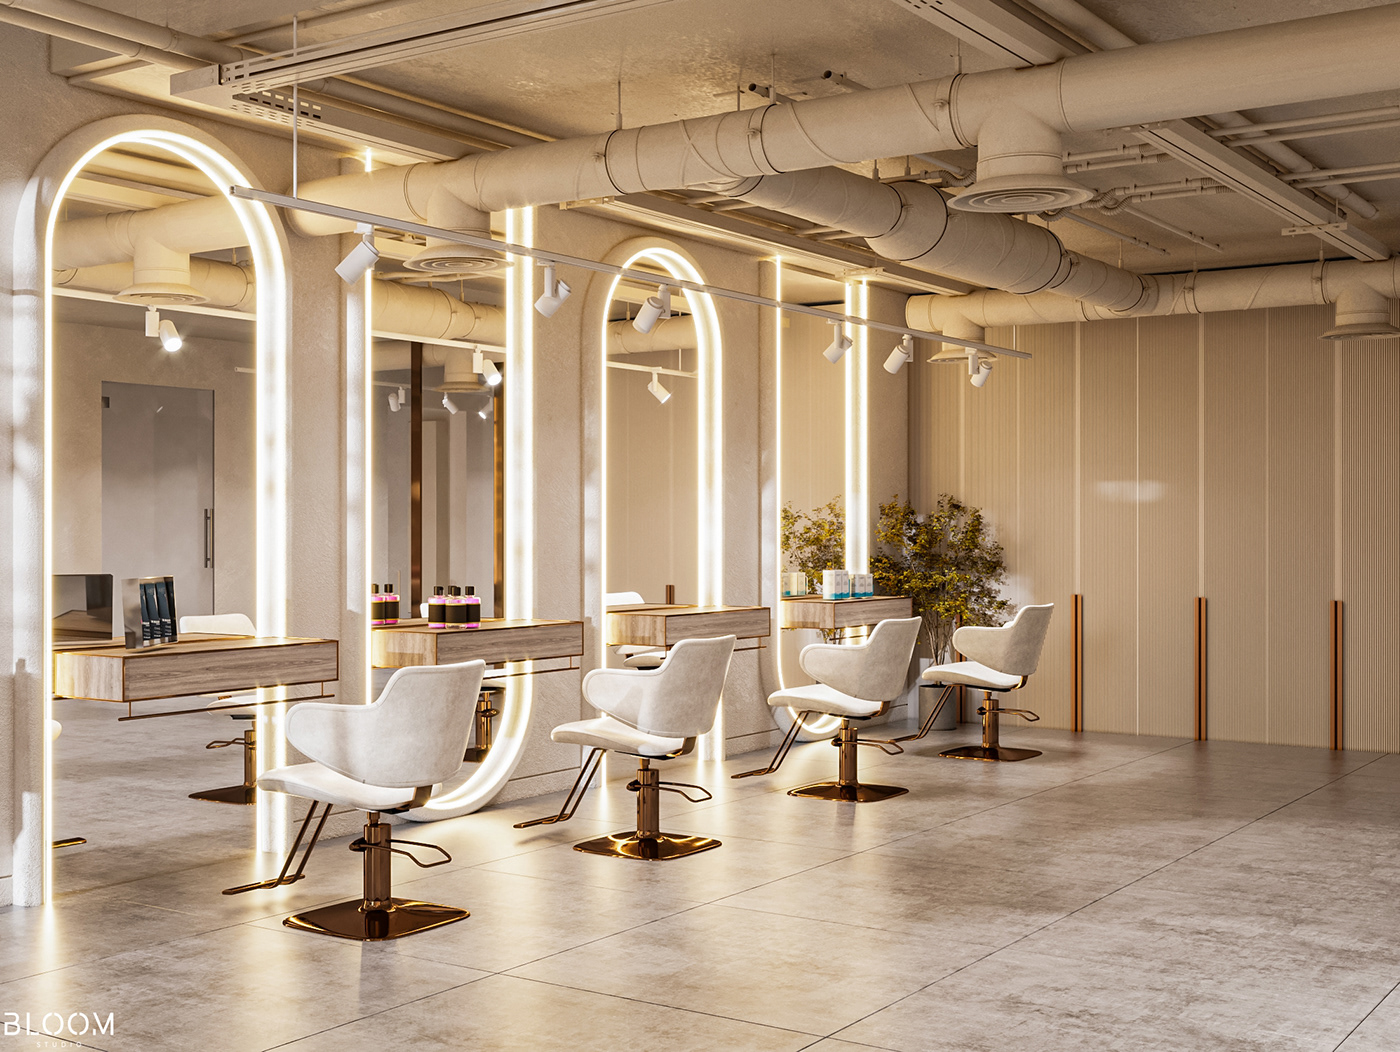 3D architecture art beauty beauty salon decor design interior design  rose salon